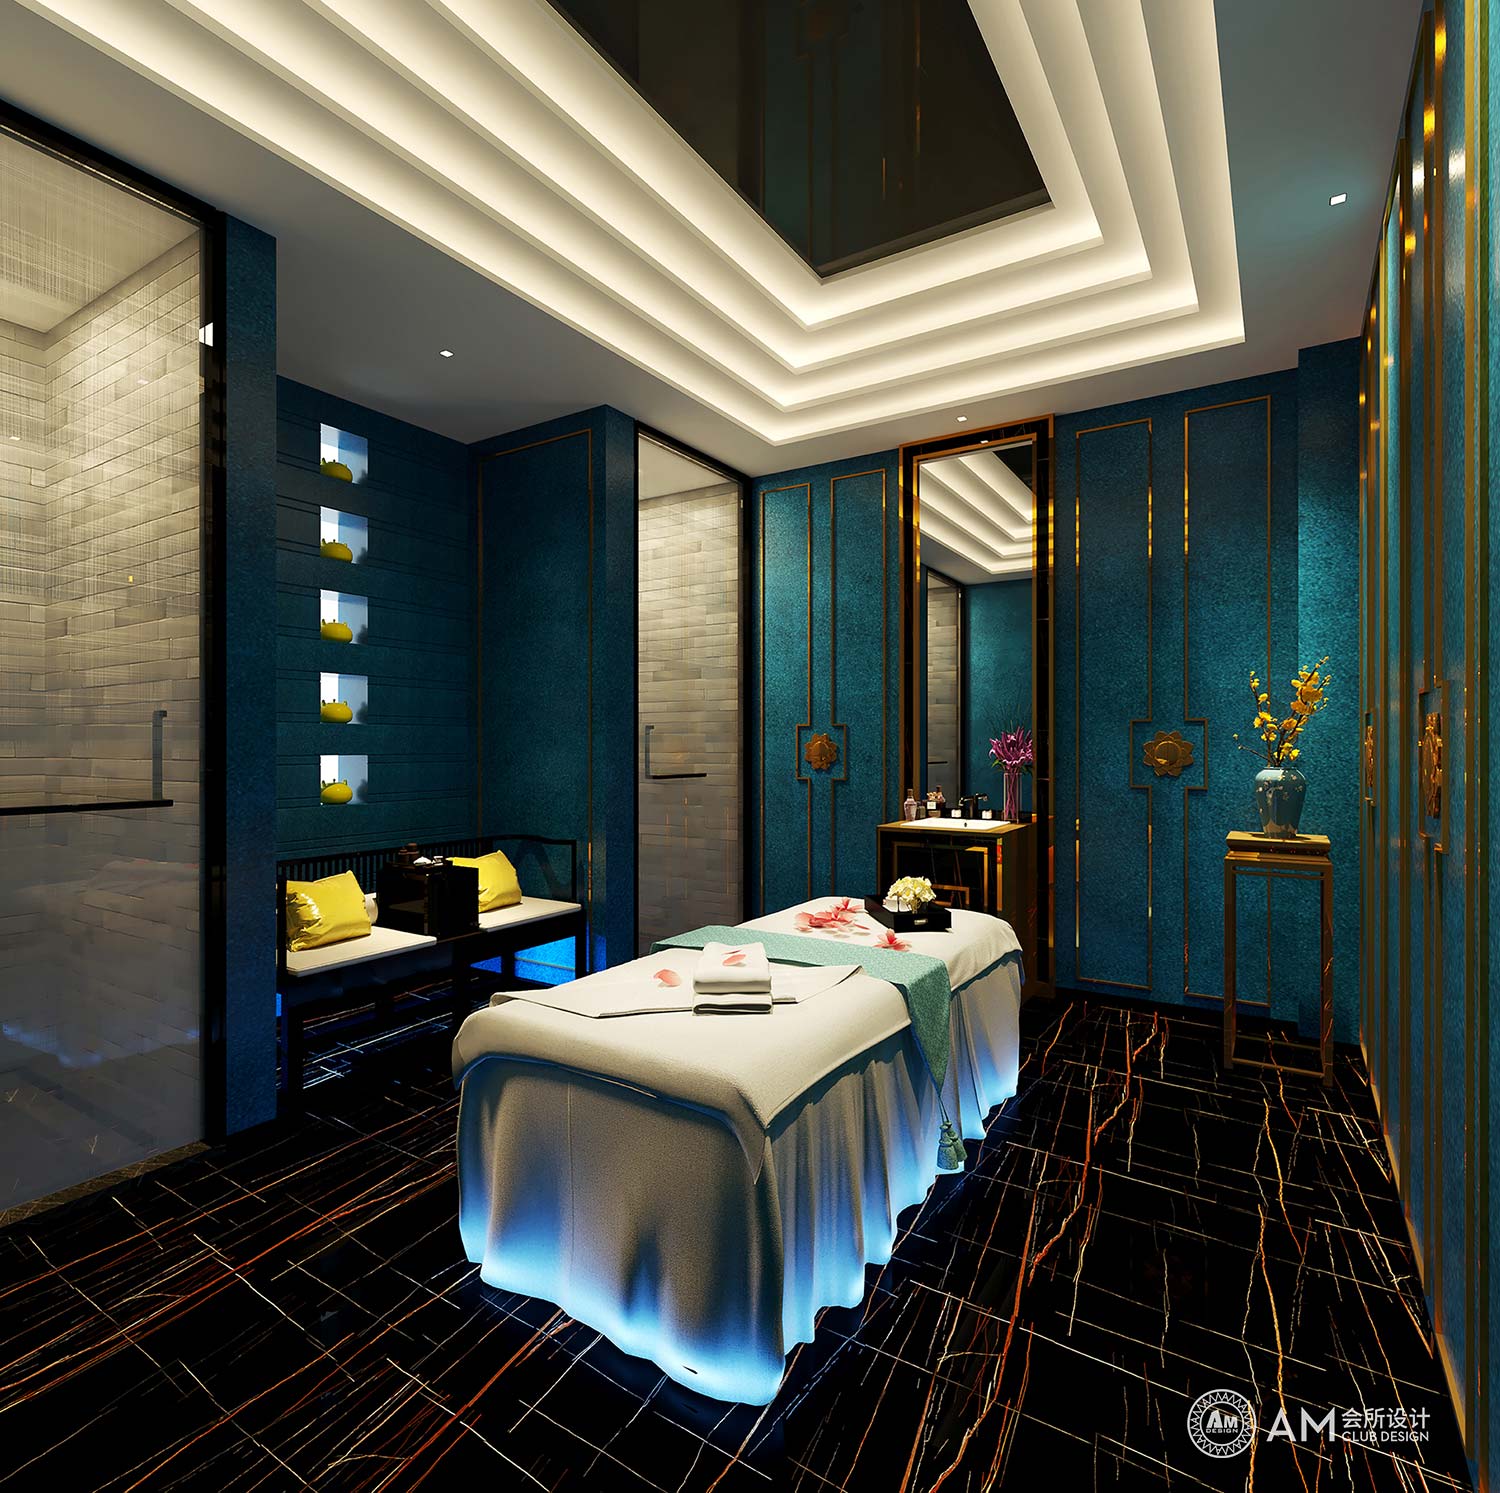 AM DESIGN | Spa room design of Baiziwan Top Spa Club